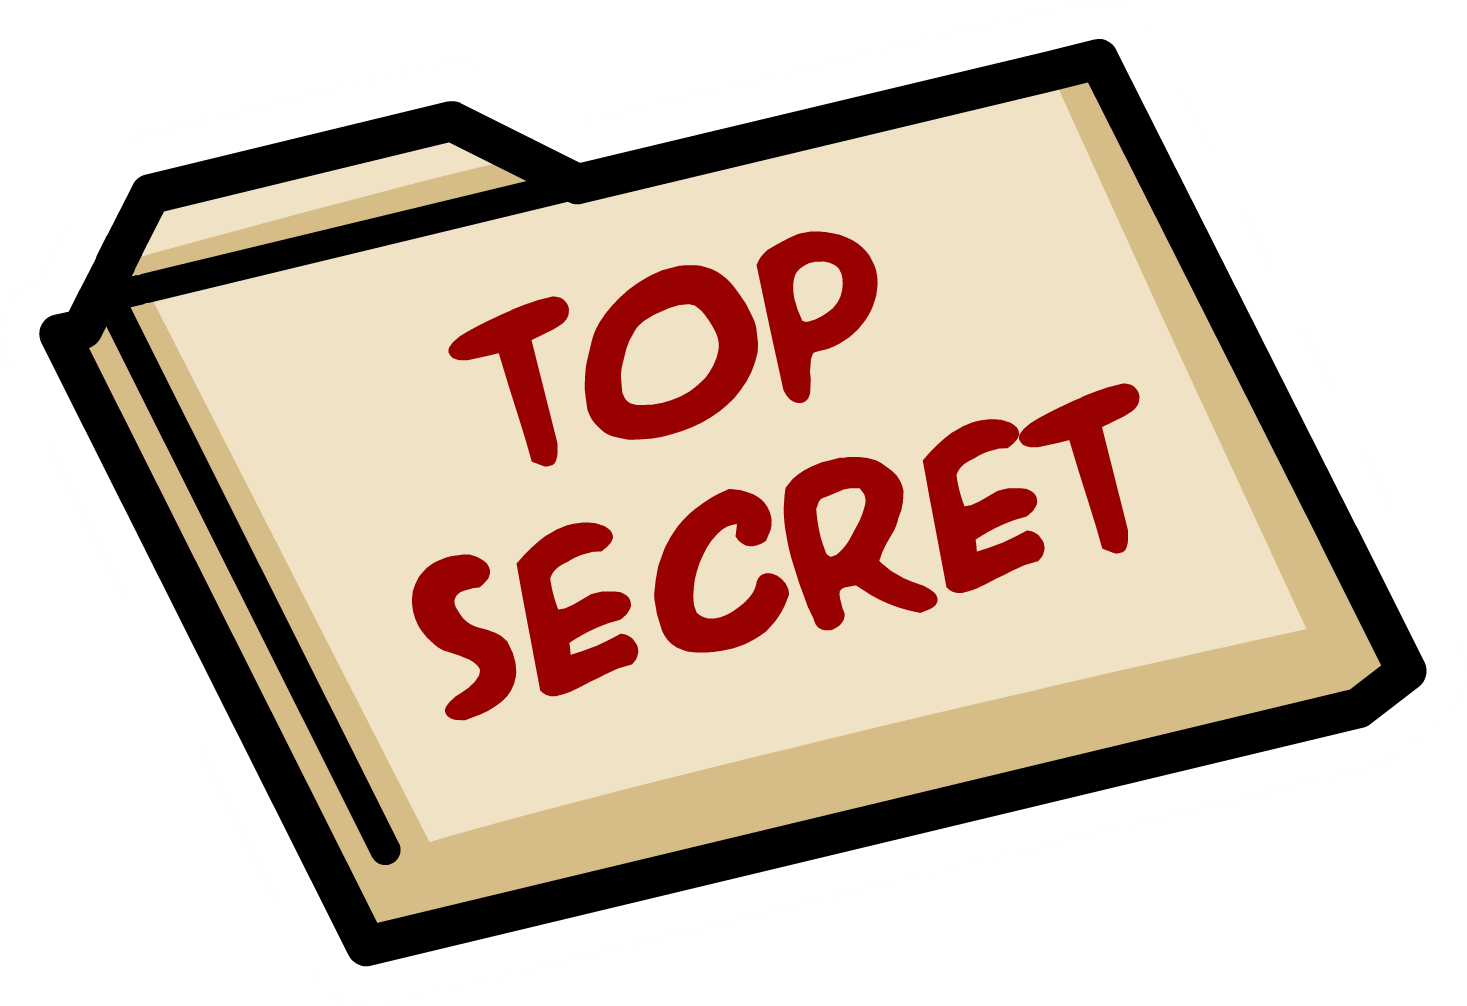 Top Secret Document Icon PNG image